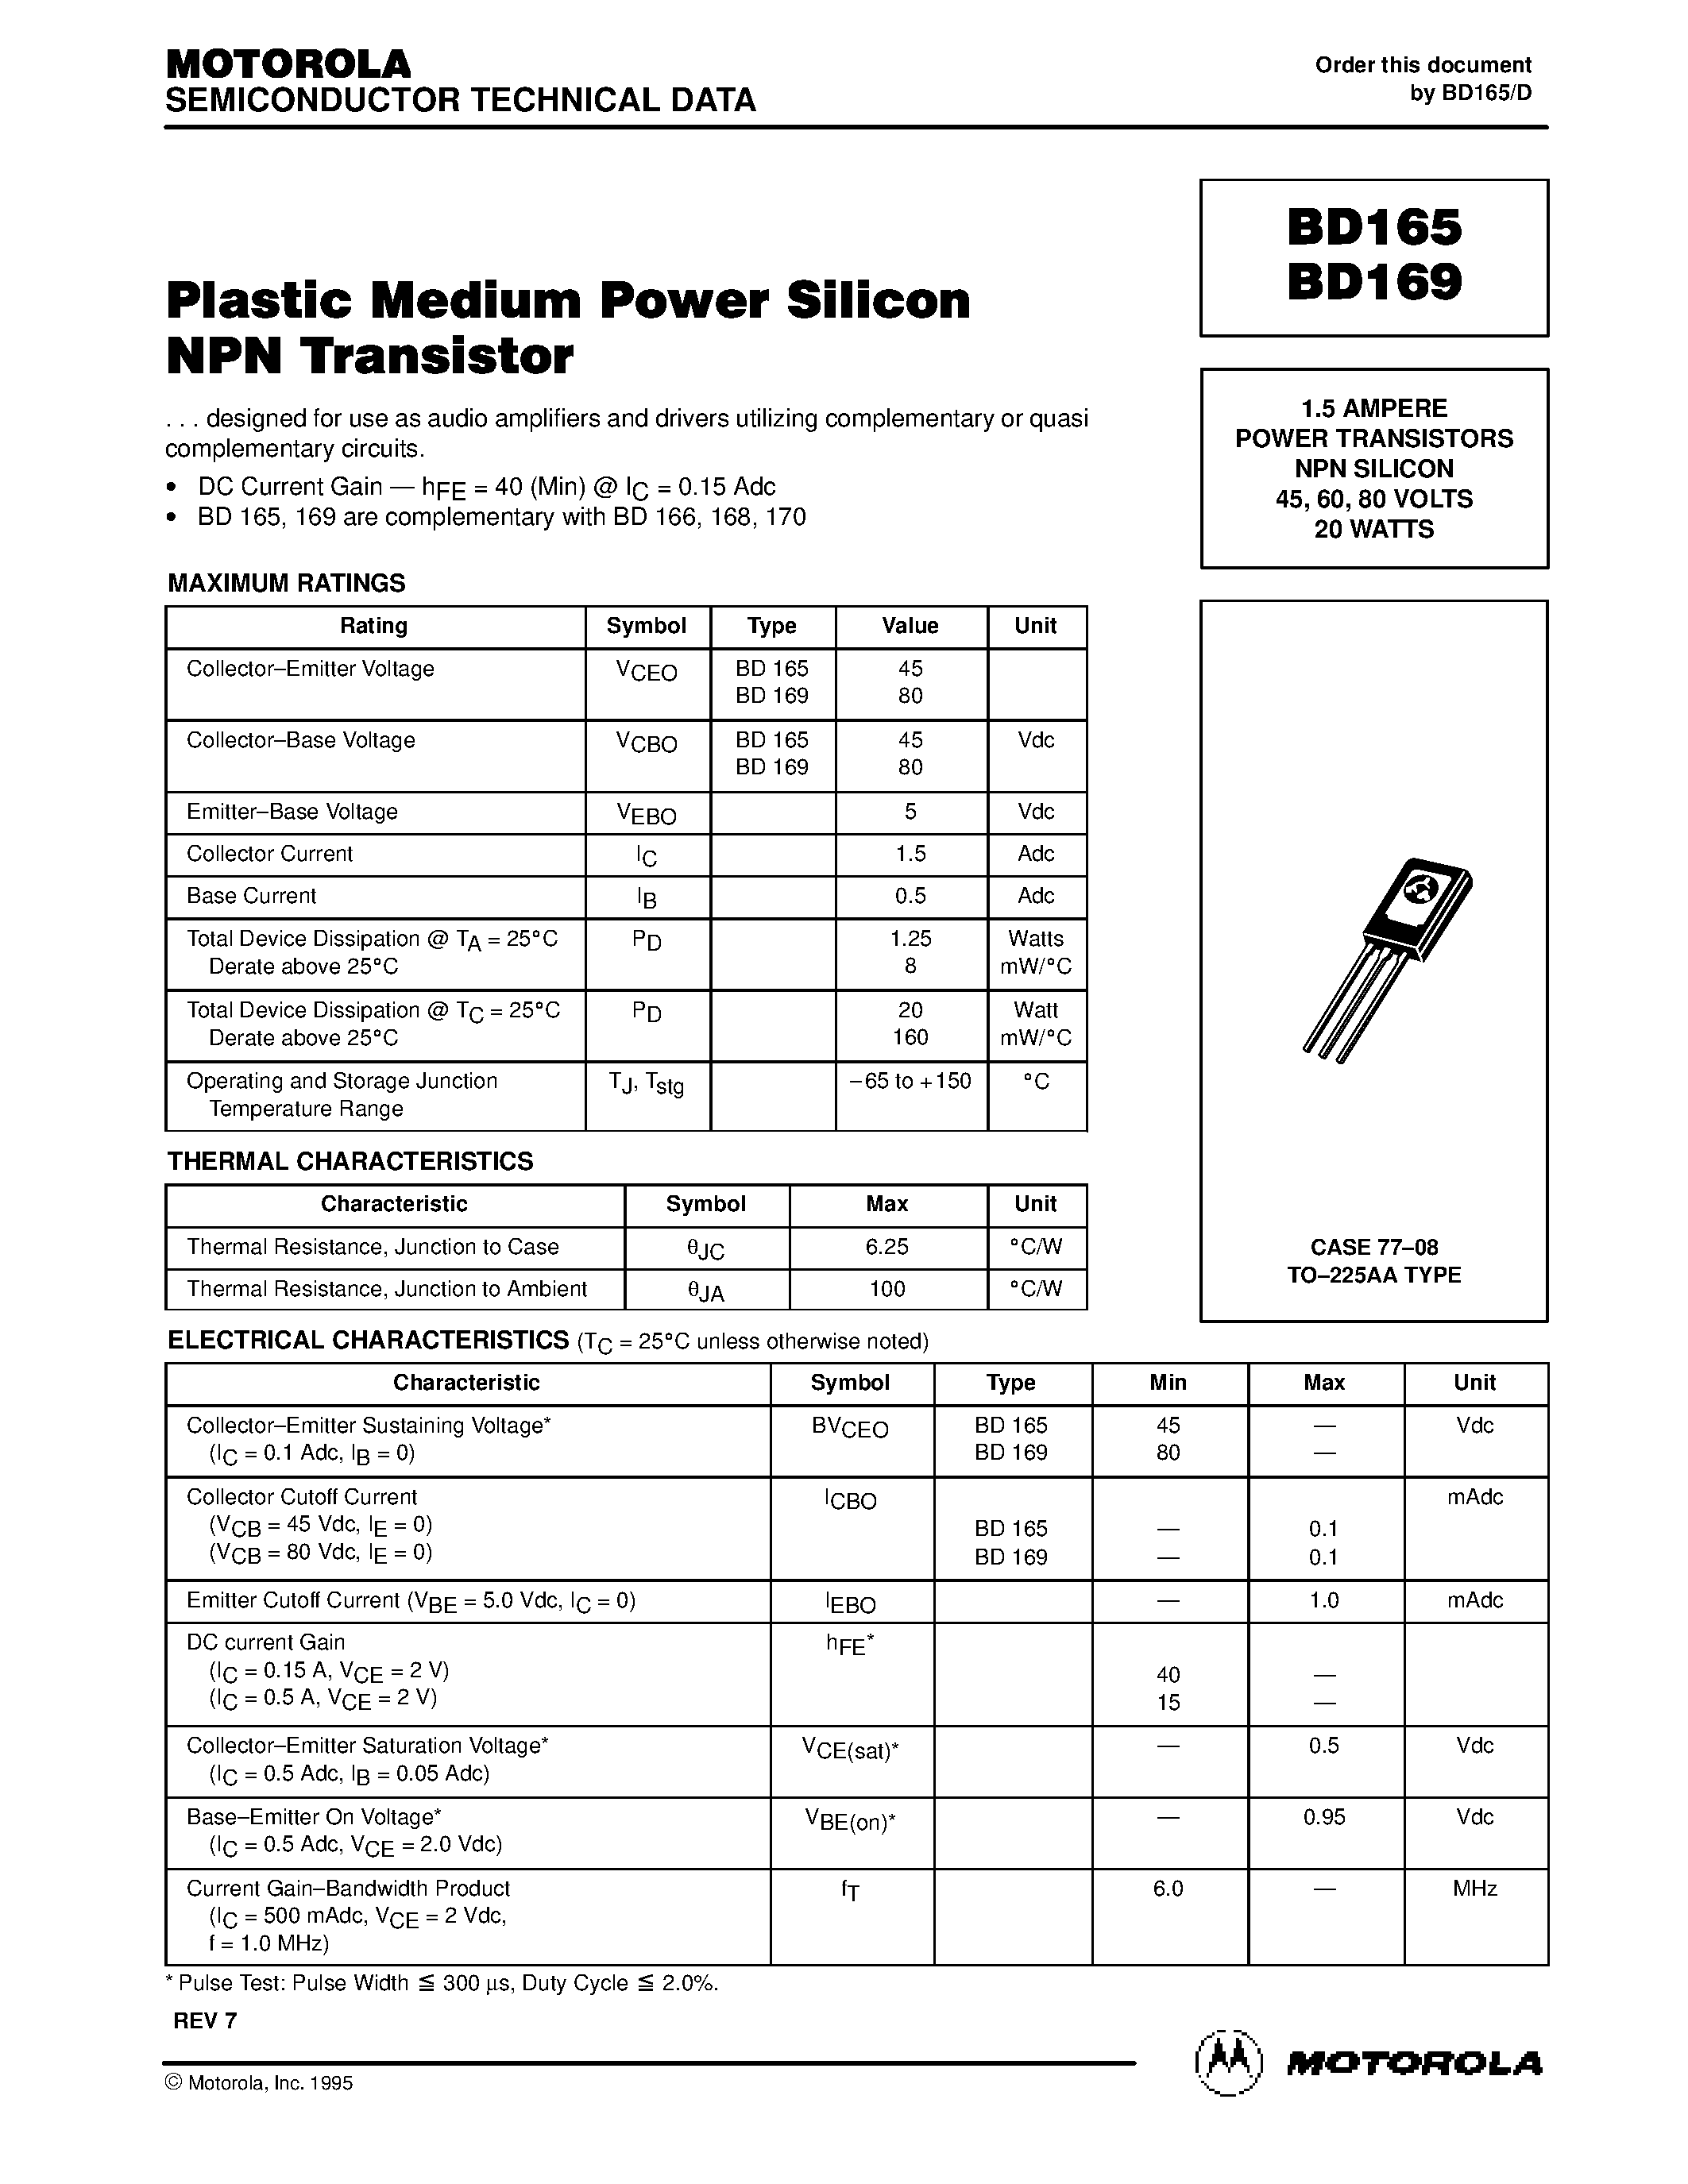 Даташит BD169 - Plastic Medium Power Silicon NPN Transistor страница 1